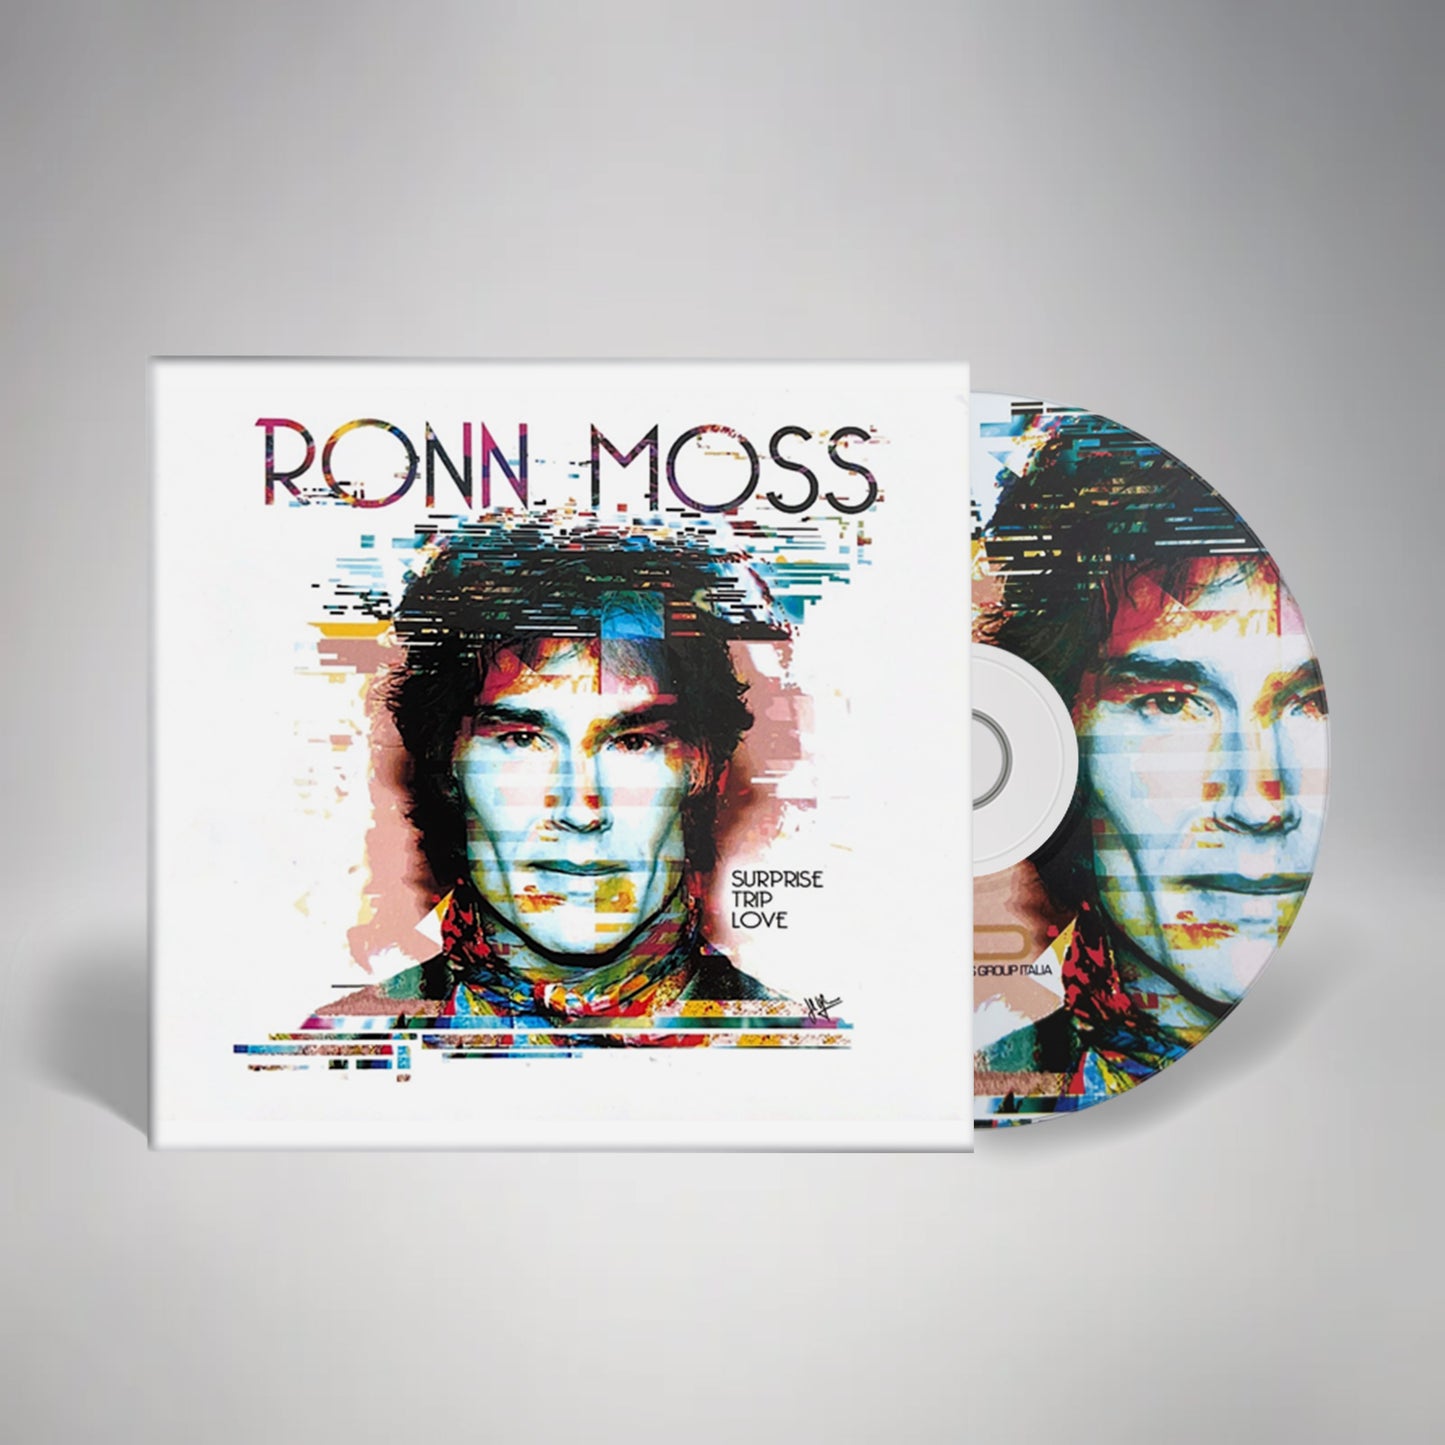 CD Ronn Moss "SURPRISE TRIP LOVE"